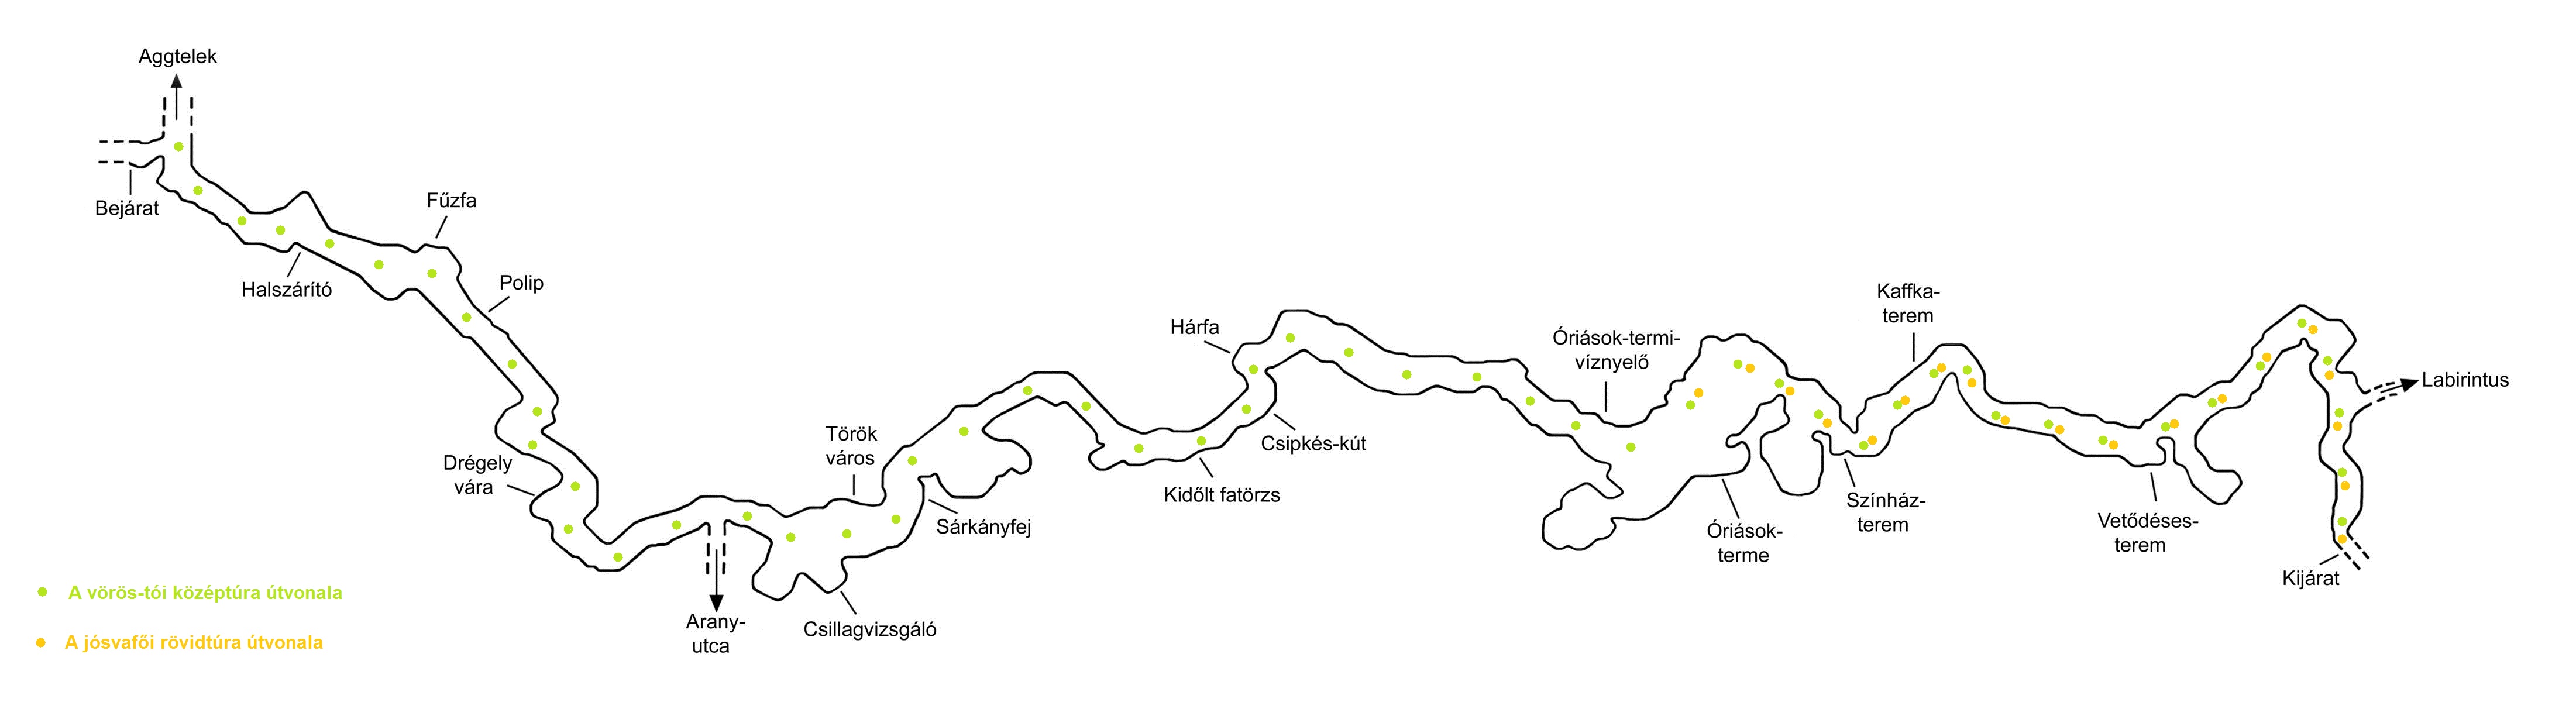 Vörös-tói középtúra illetve jósvafői rövidtúra útvonala